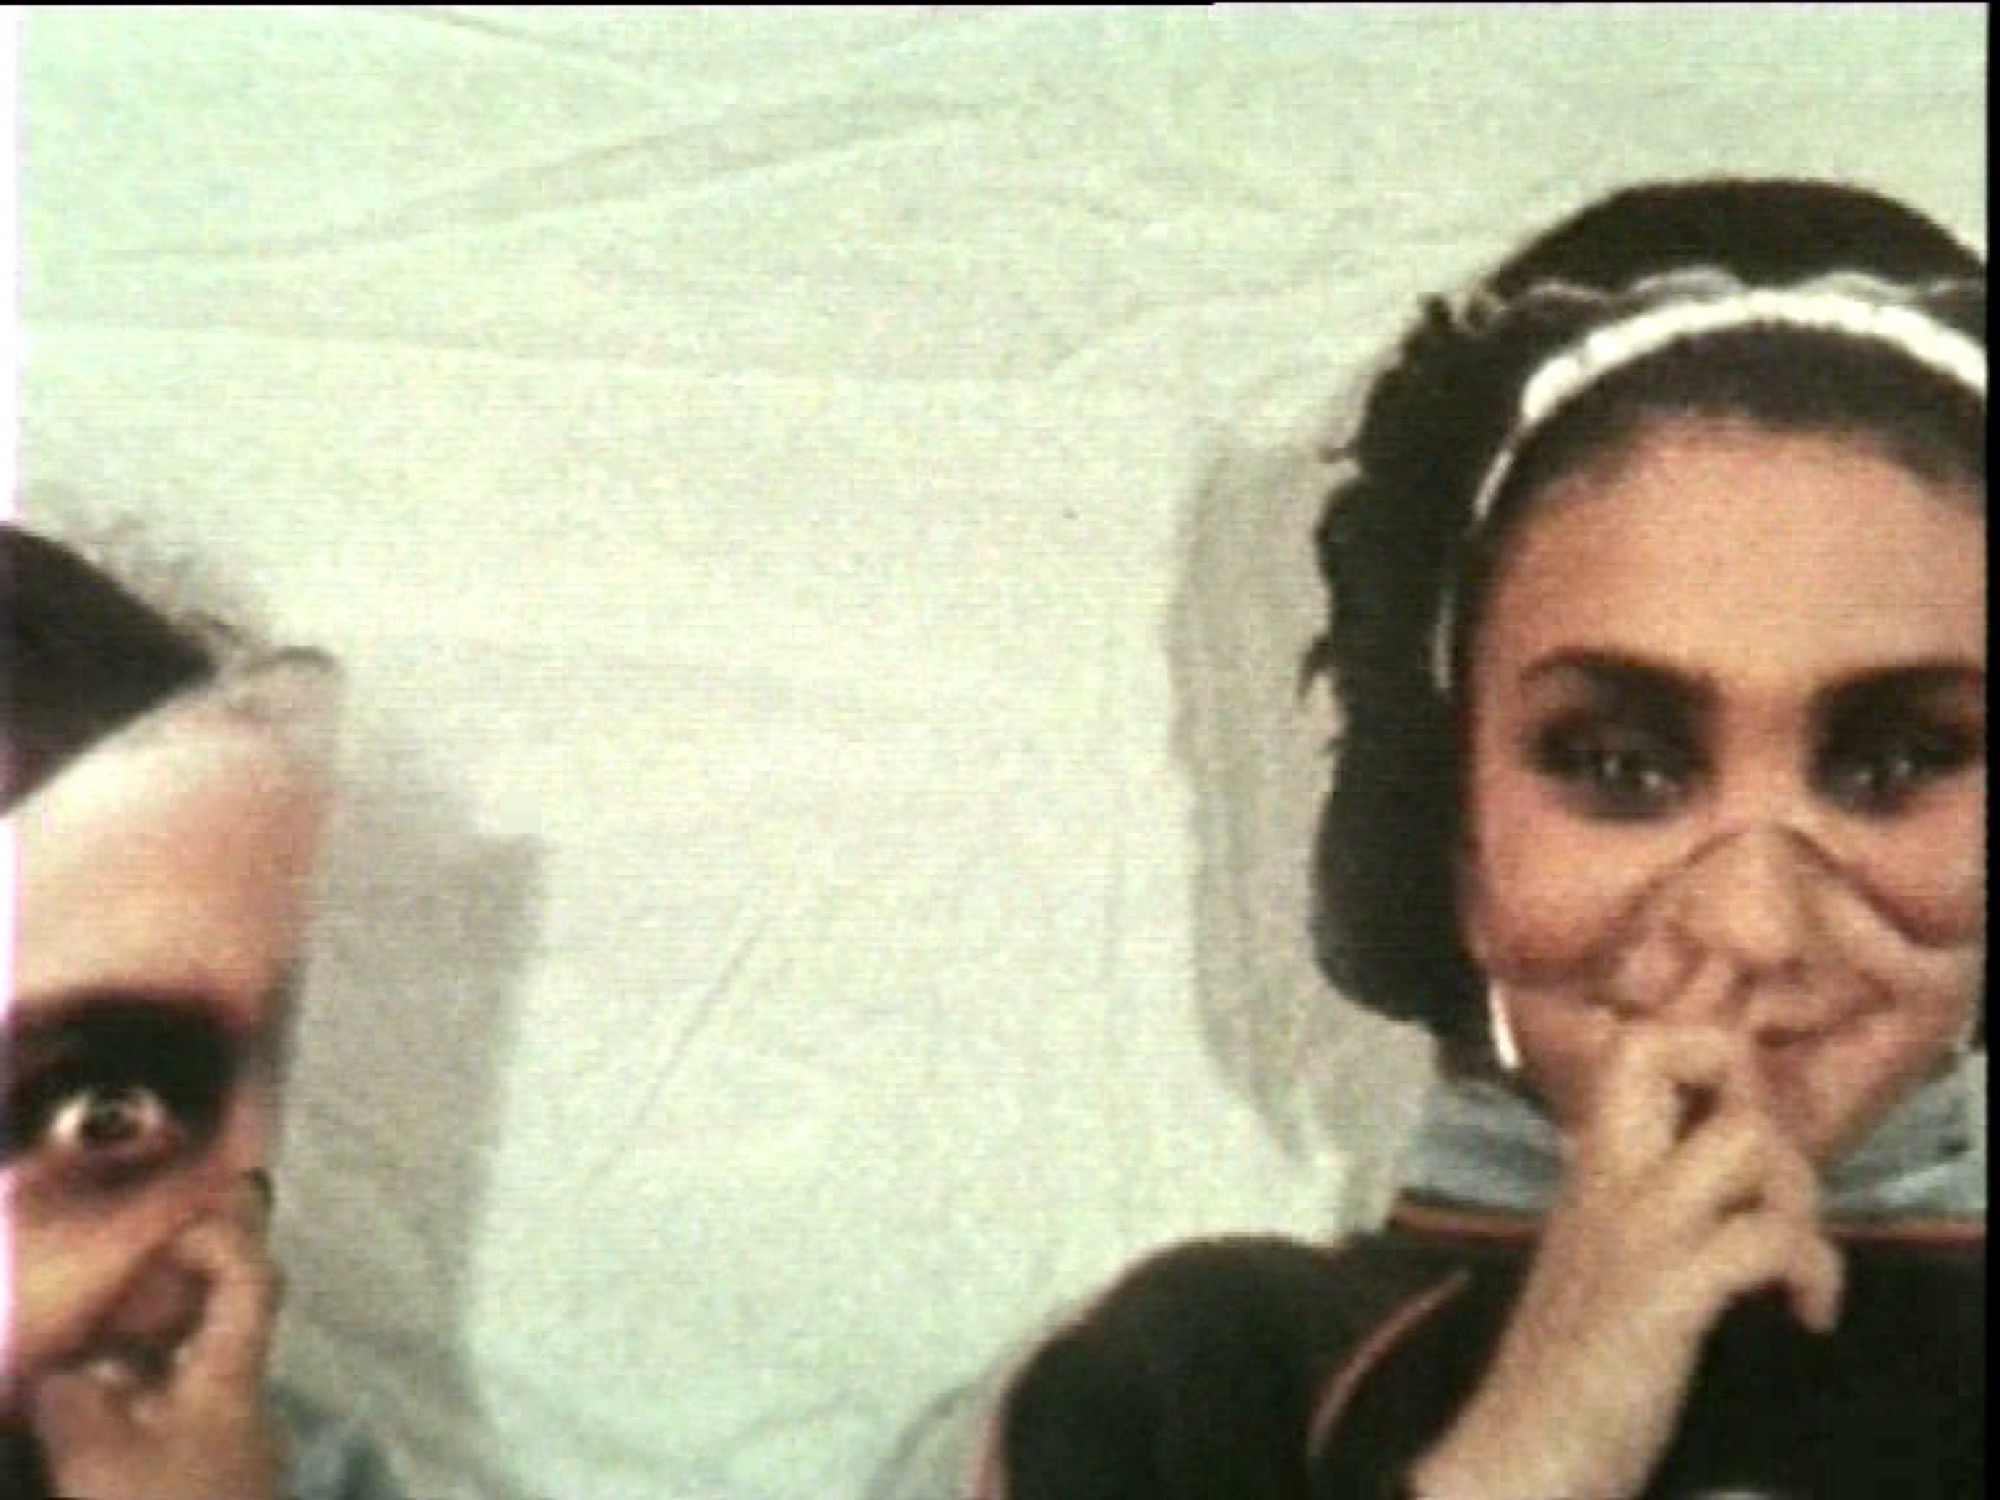 Destiny Deacon and Virginia Fraser, <em>Forced into images</em>, 2001, Super 8 film transferred to single-channel digital video, 9 mins 8 secs, dimensions variable, silent.